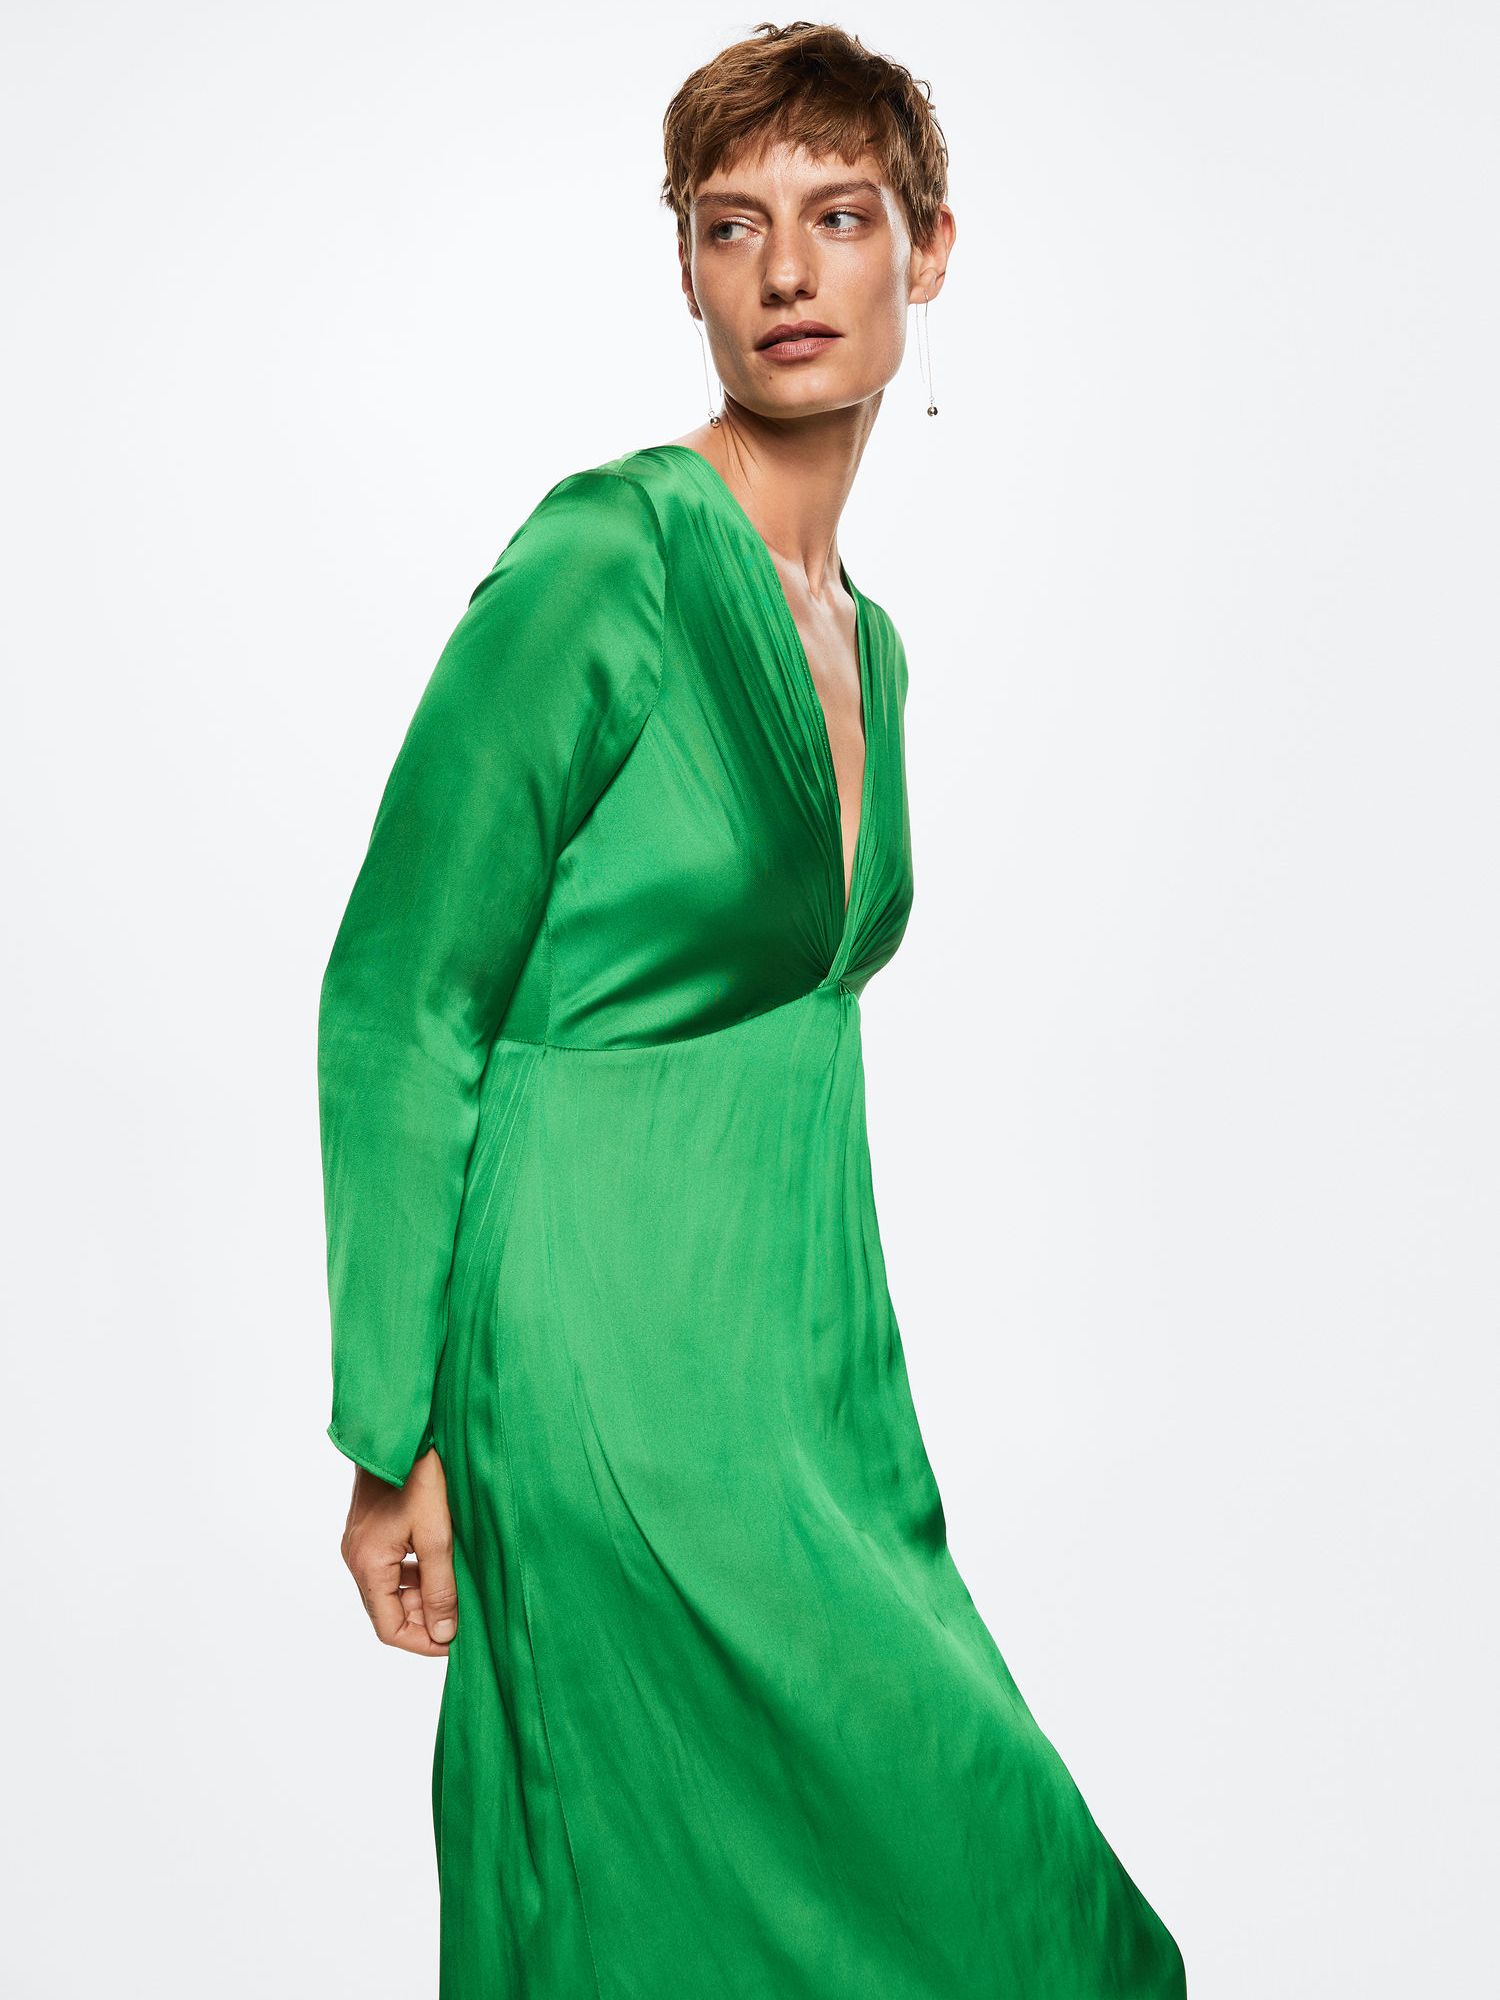 Mango Plunge Neck Midi Dress, Green at John Lewis & Partners